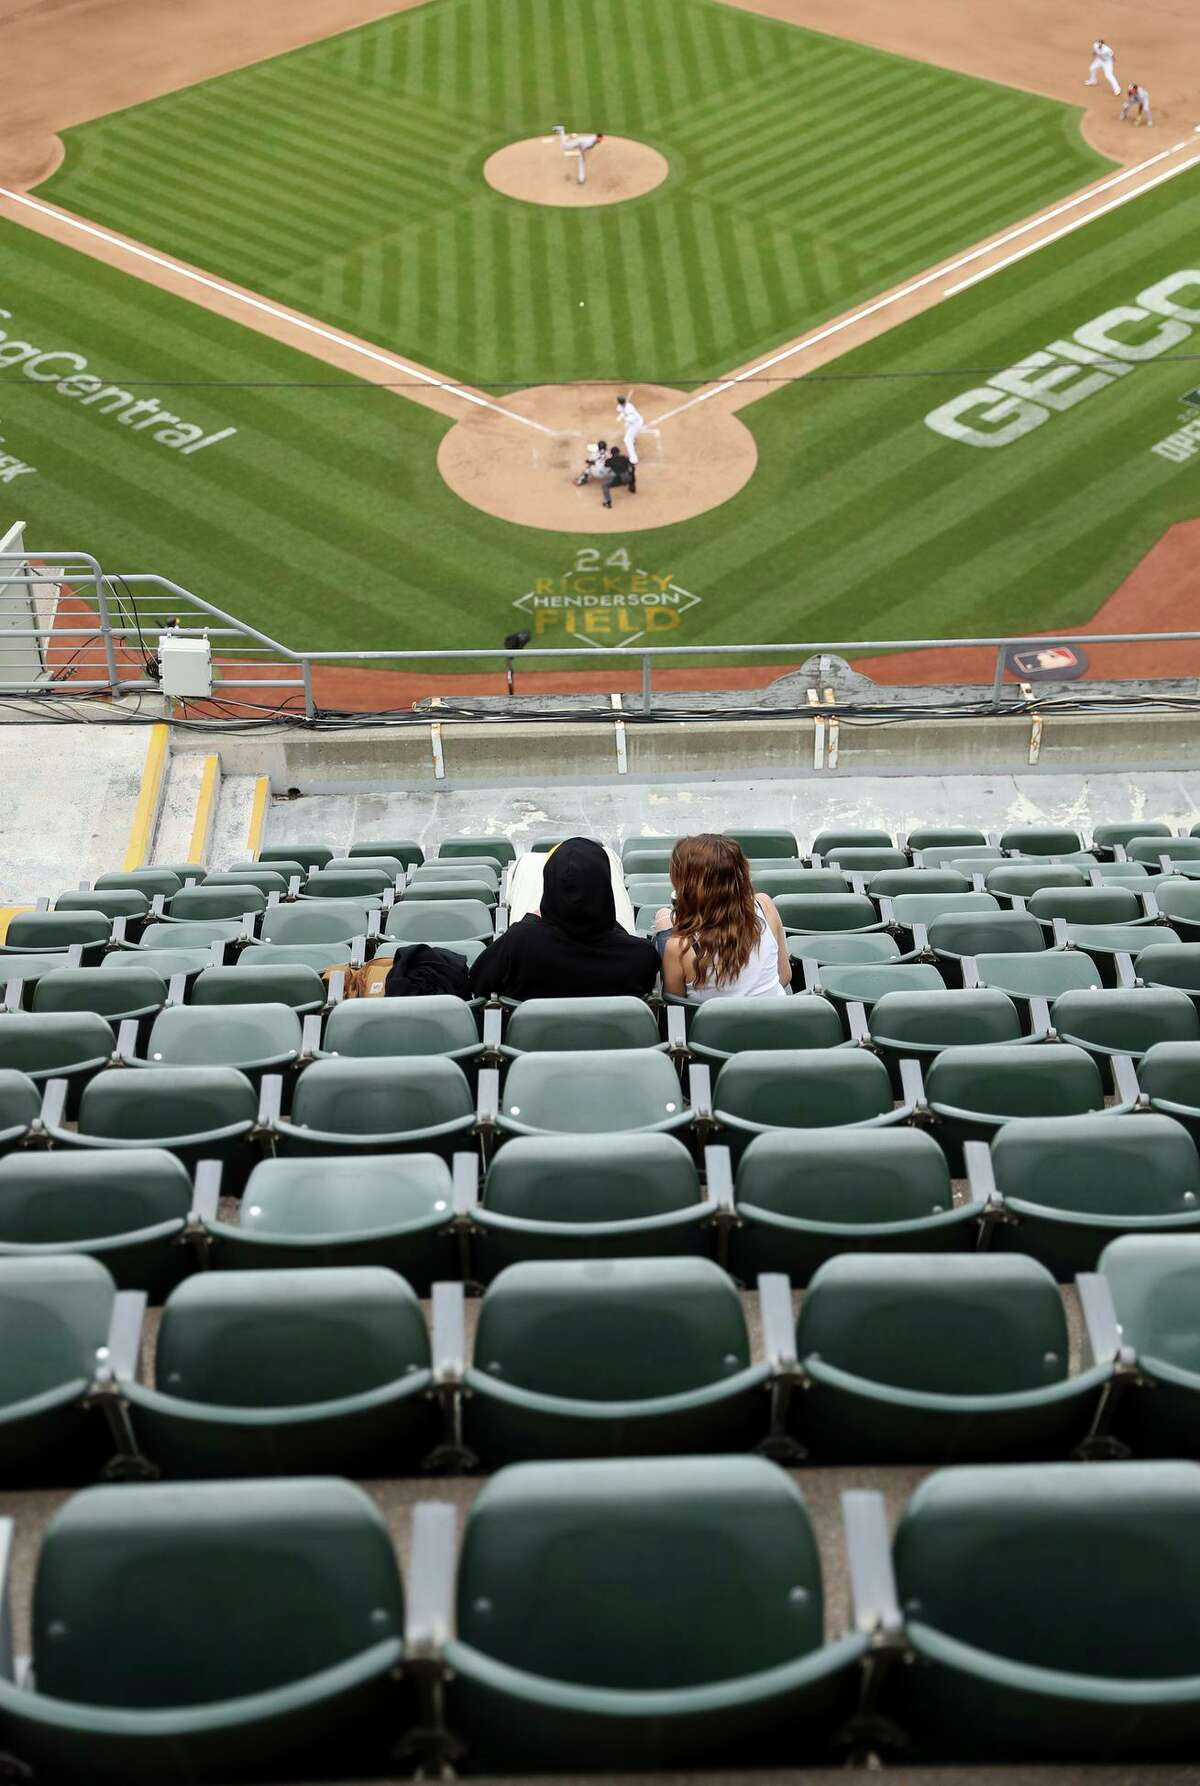 Oakland As See Empty Coliseum Seats Amid Fan Frustration